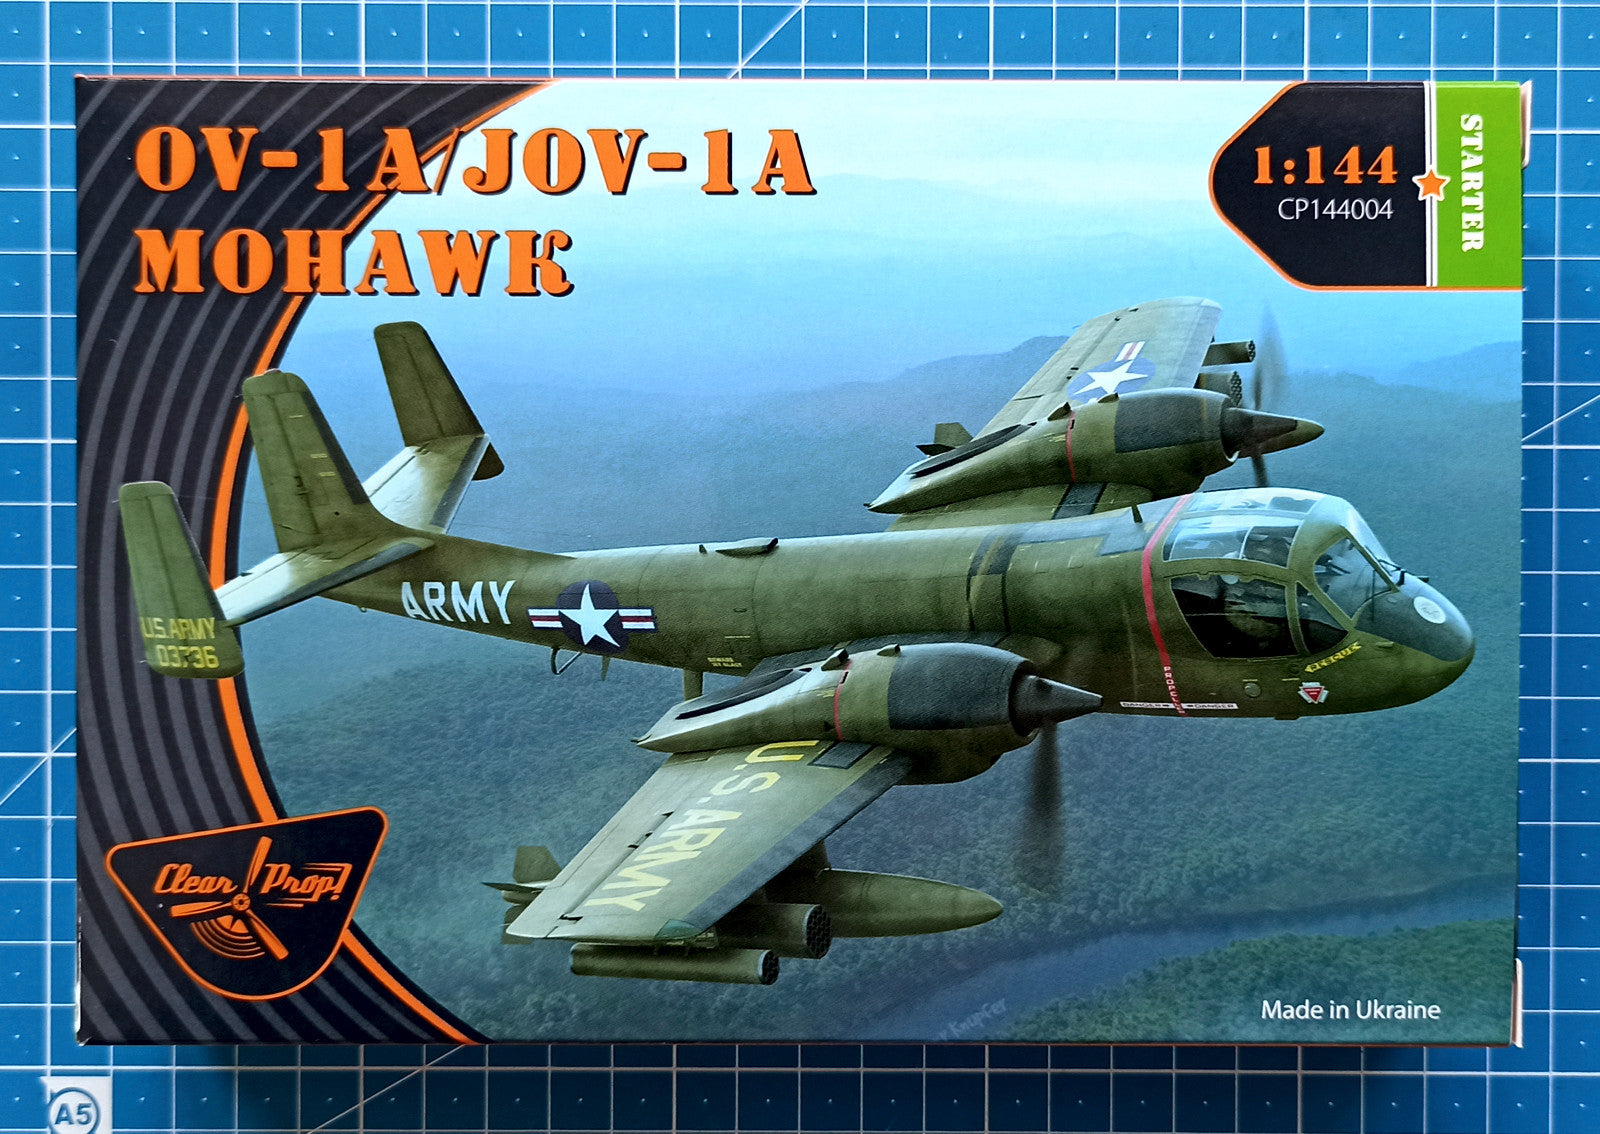 1/144 Grumman OV-1A/JOV-1A Mohawk. Clear Prop! CP144004